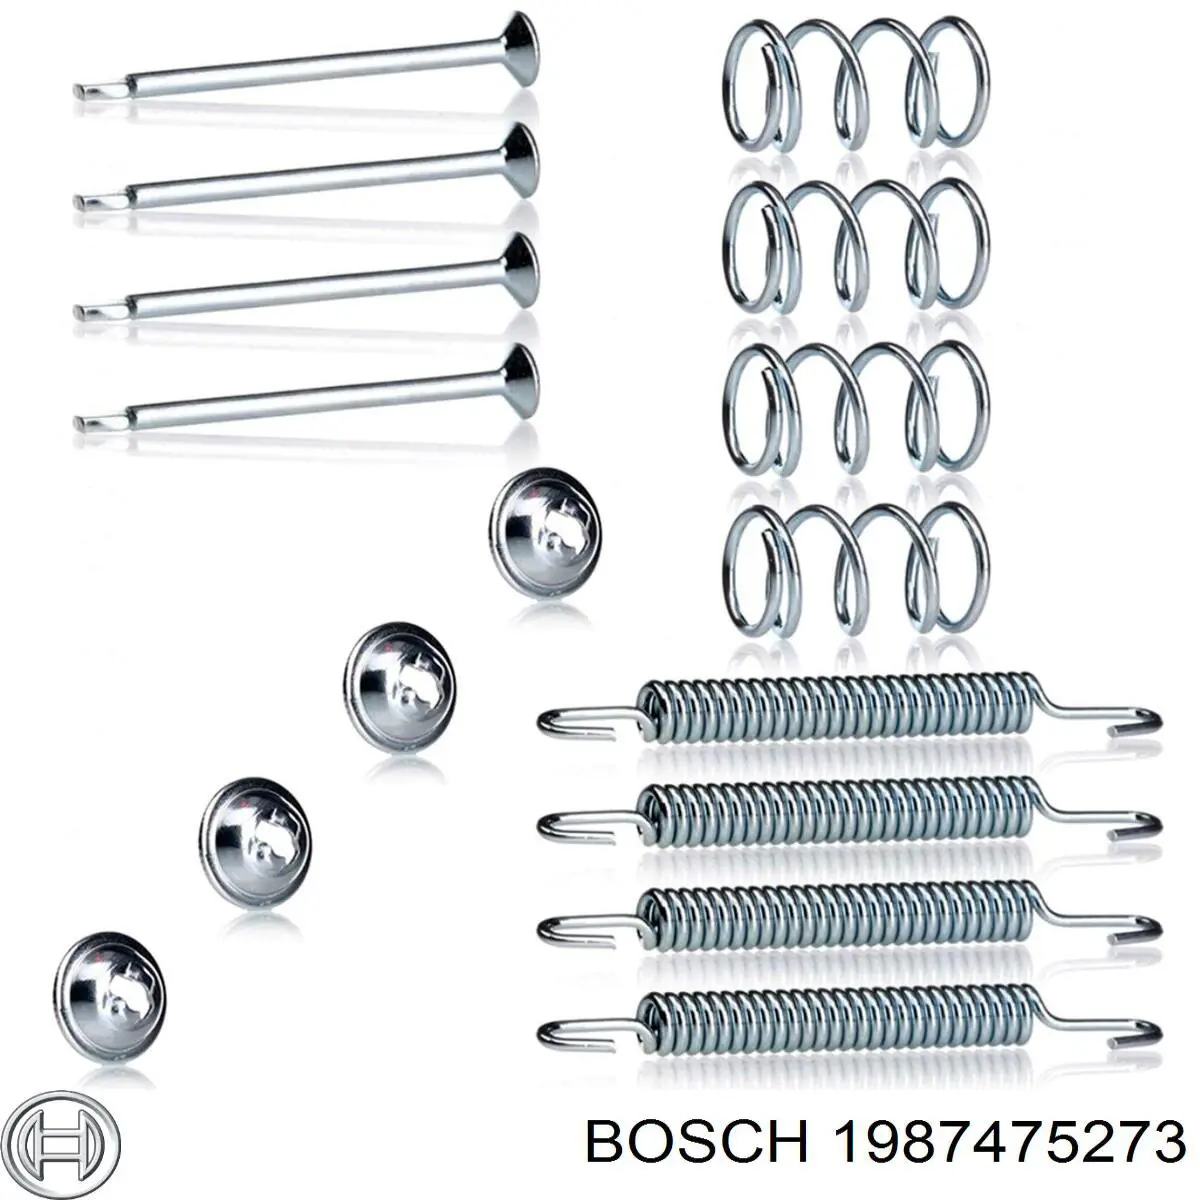 1987475273 Bosch kit de montaje, zapatas de freno traseras